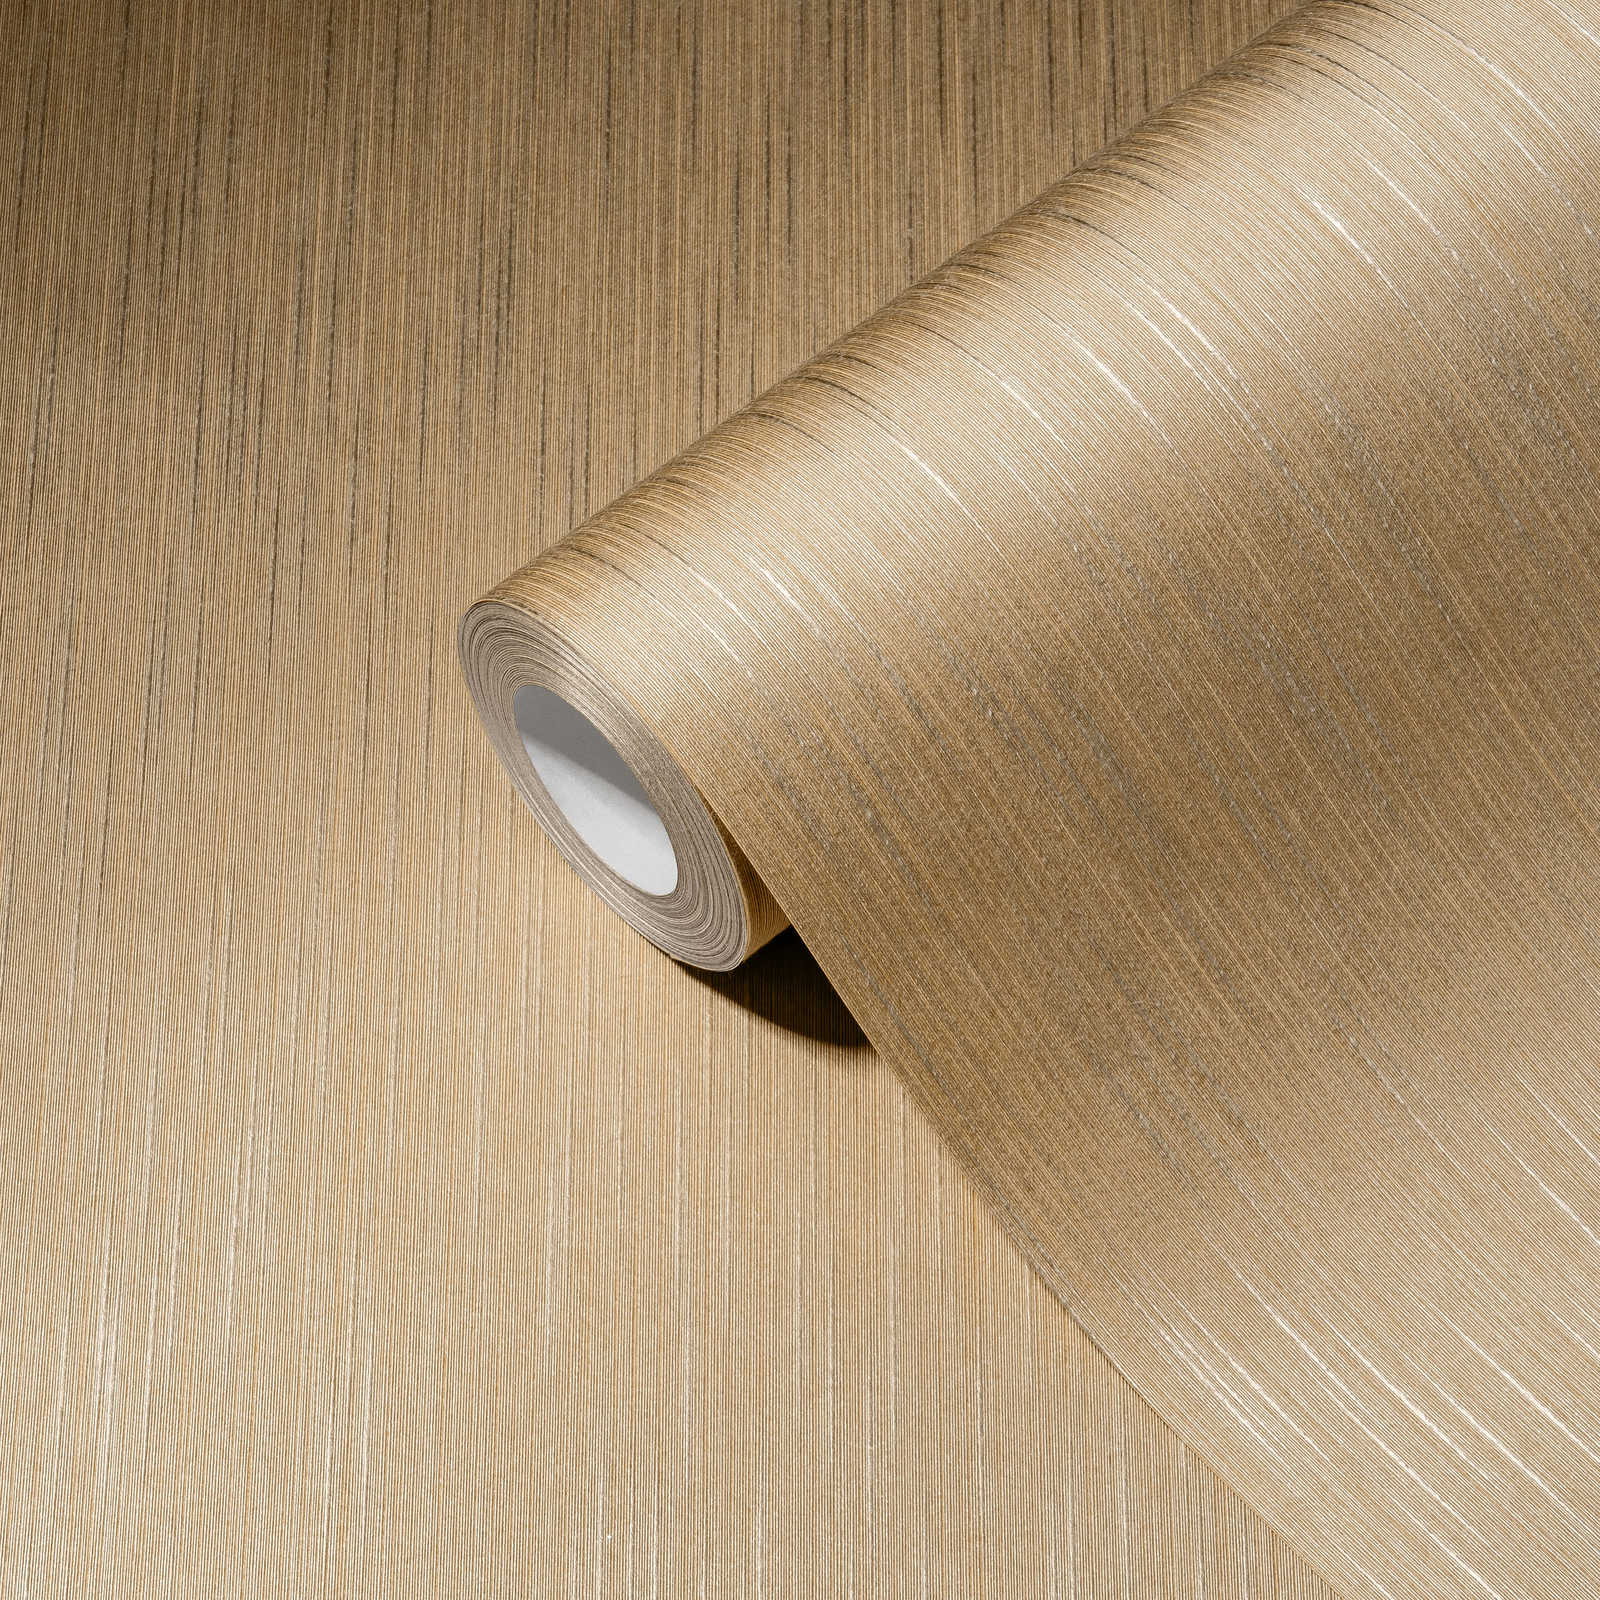             Sand optics wallpaper beige mottled with textile texture
        